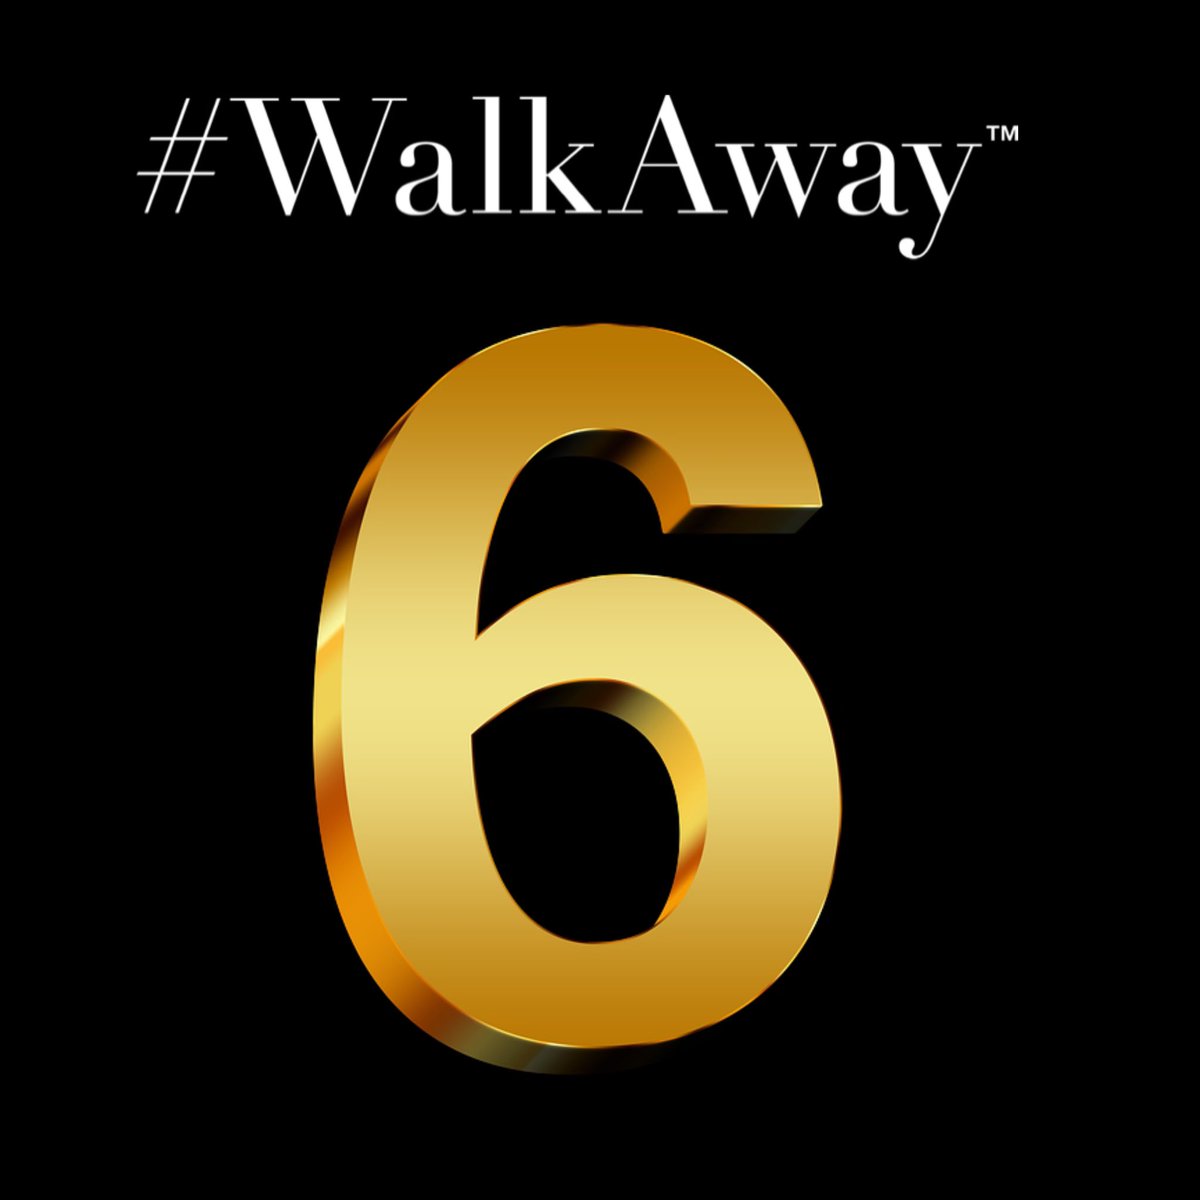 Happy 6th Birthday TODAY, #WalkAway!